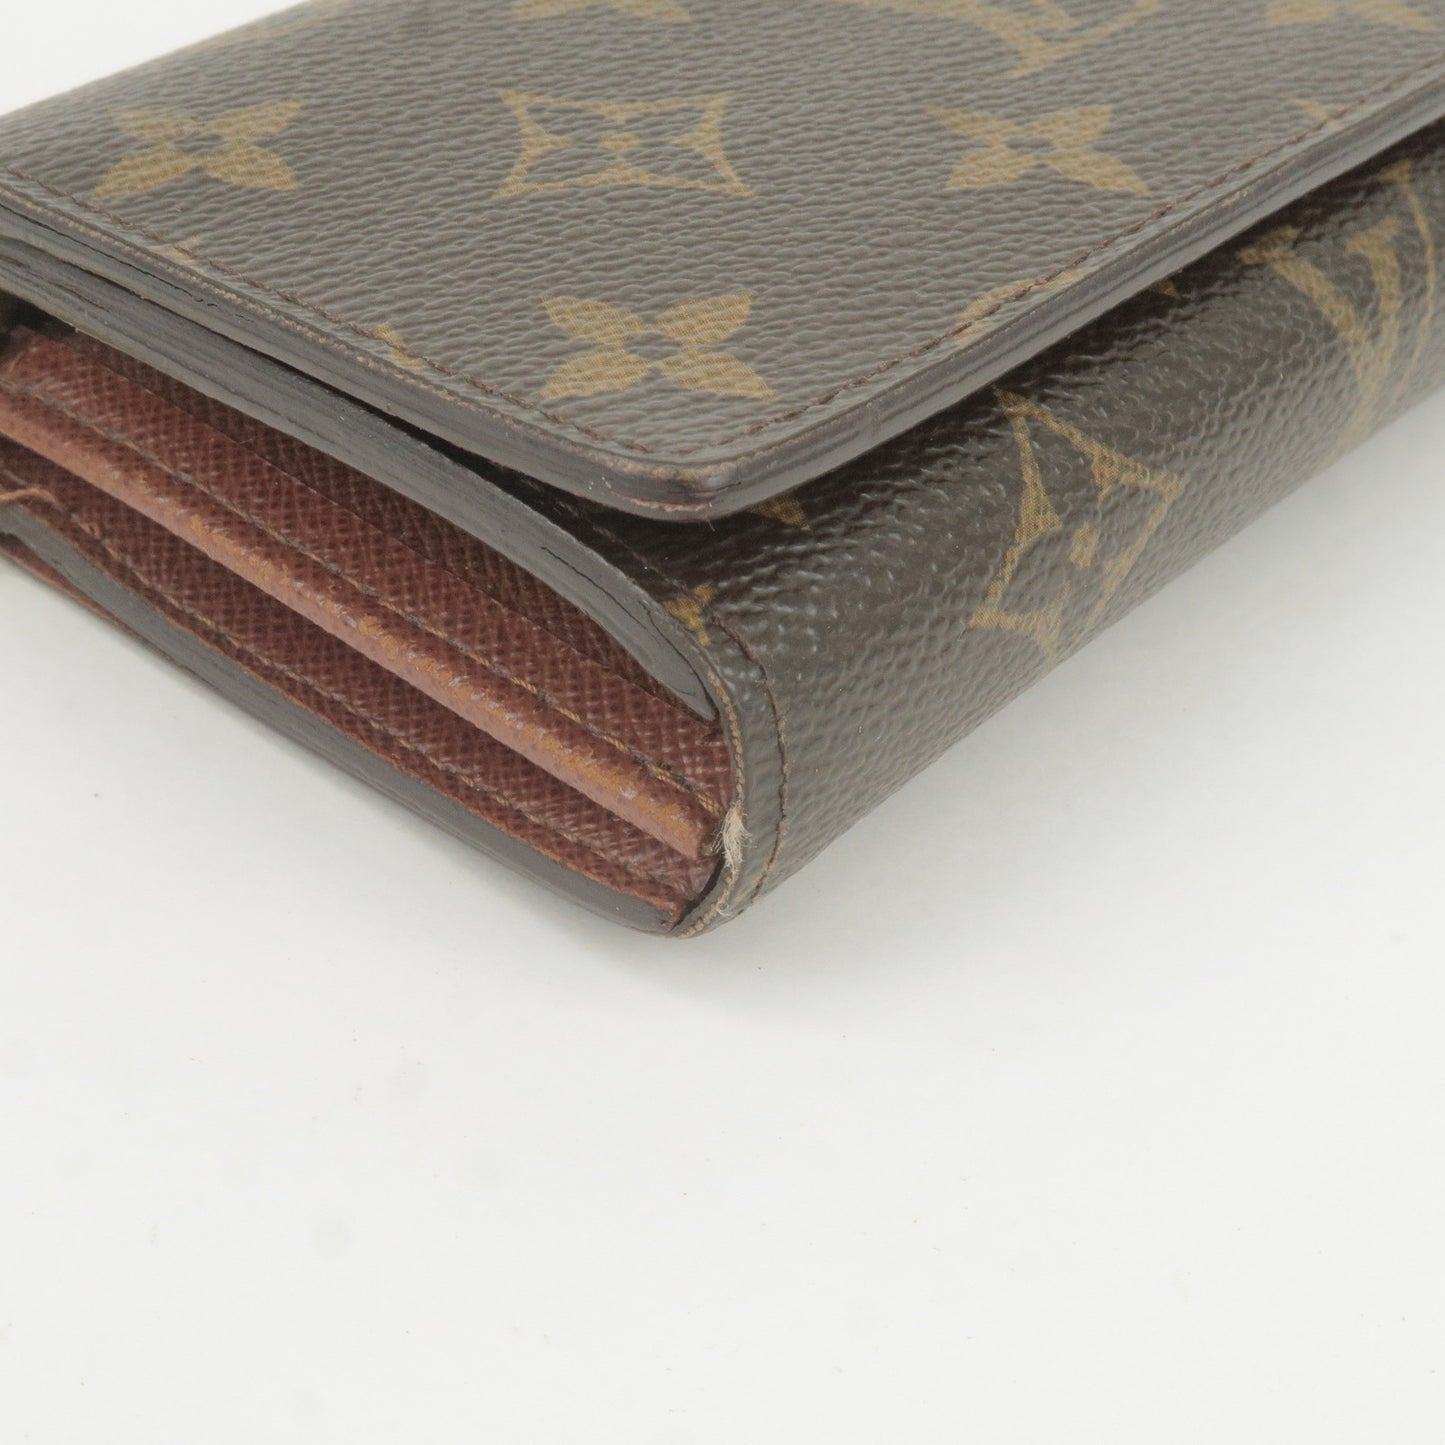 Louis Vuitton Monogram Set of 2 Wallet Bifold Wallet R20503 M61736